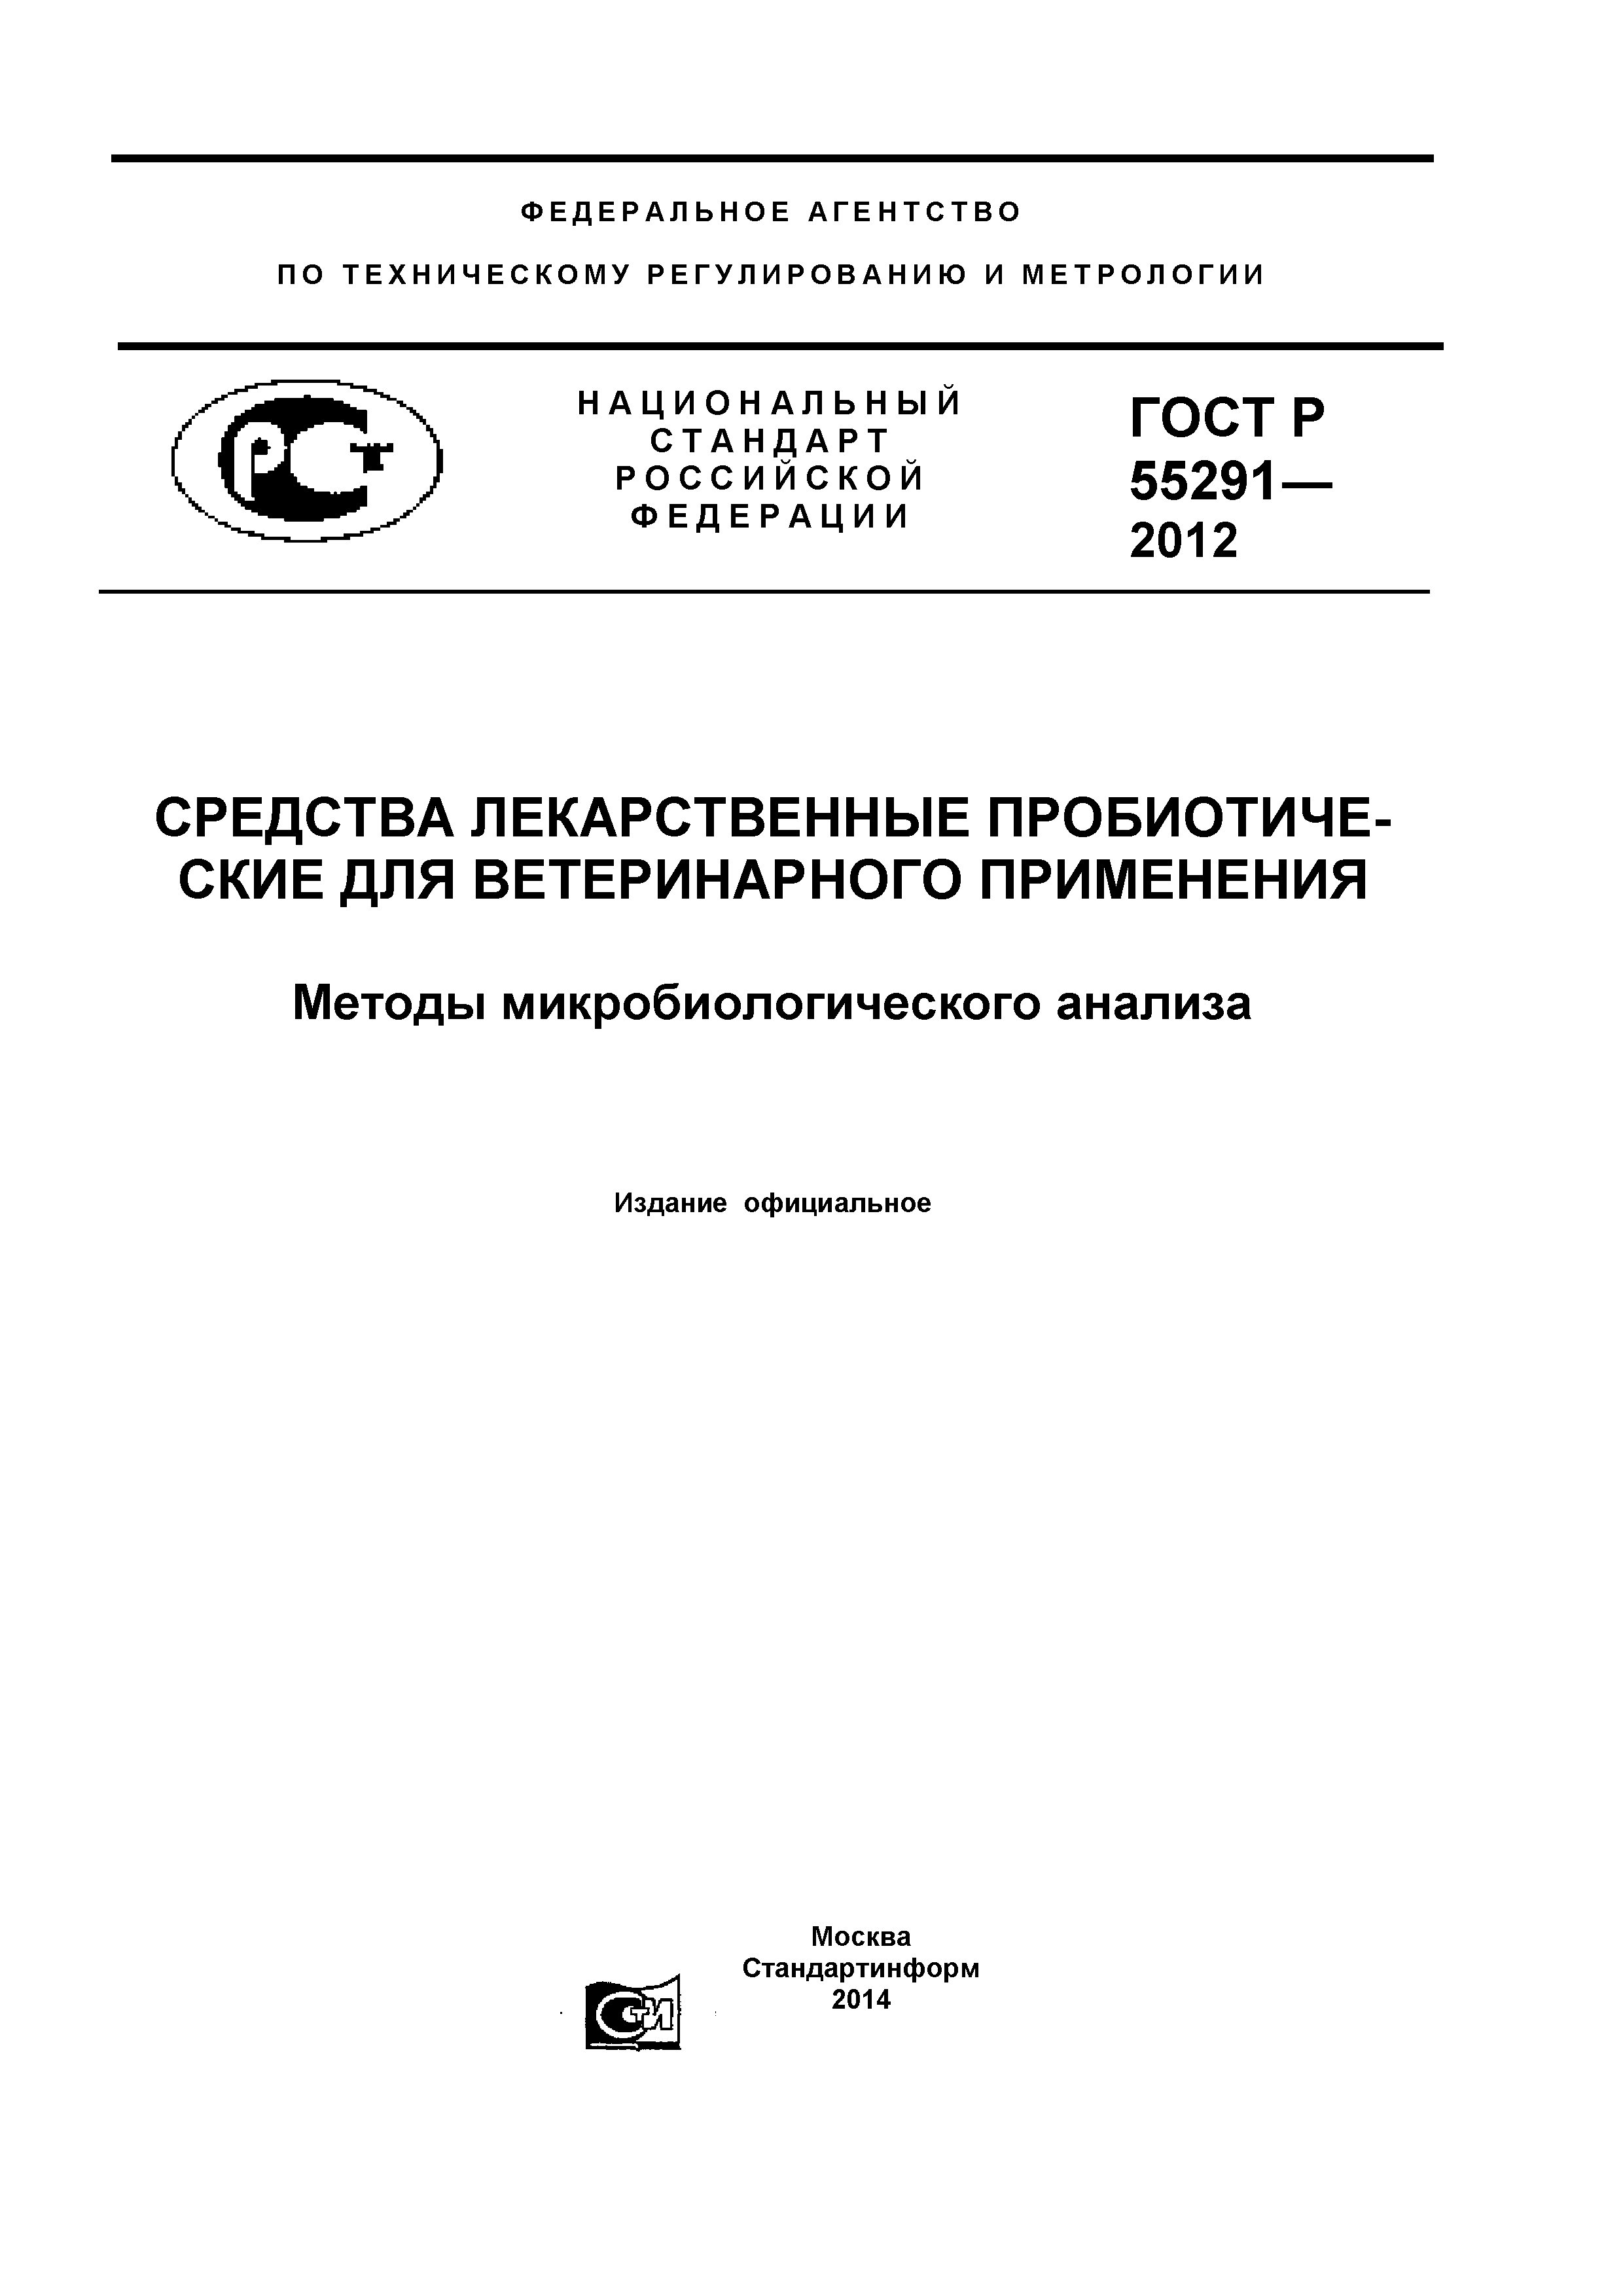 ГОСТ Р 55291-2012